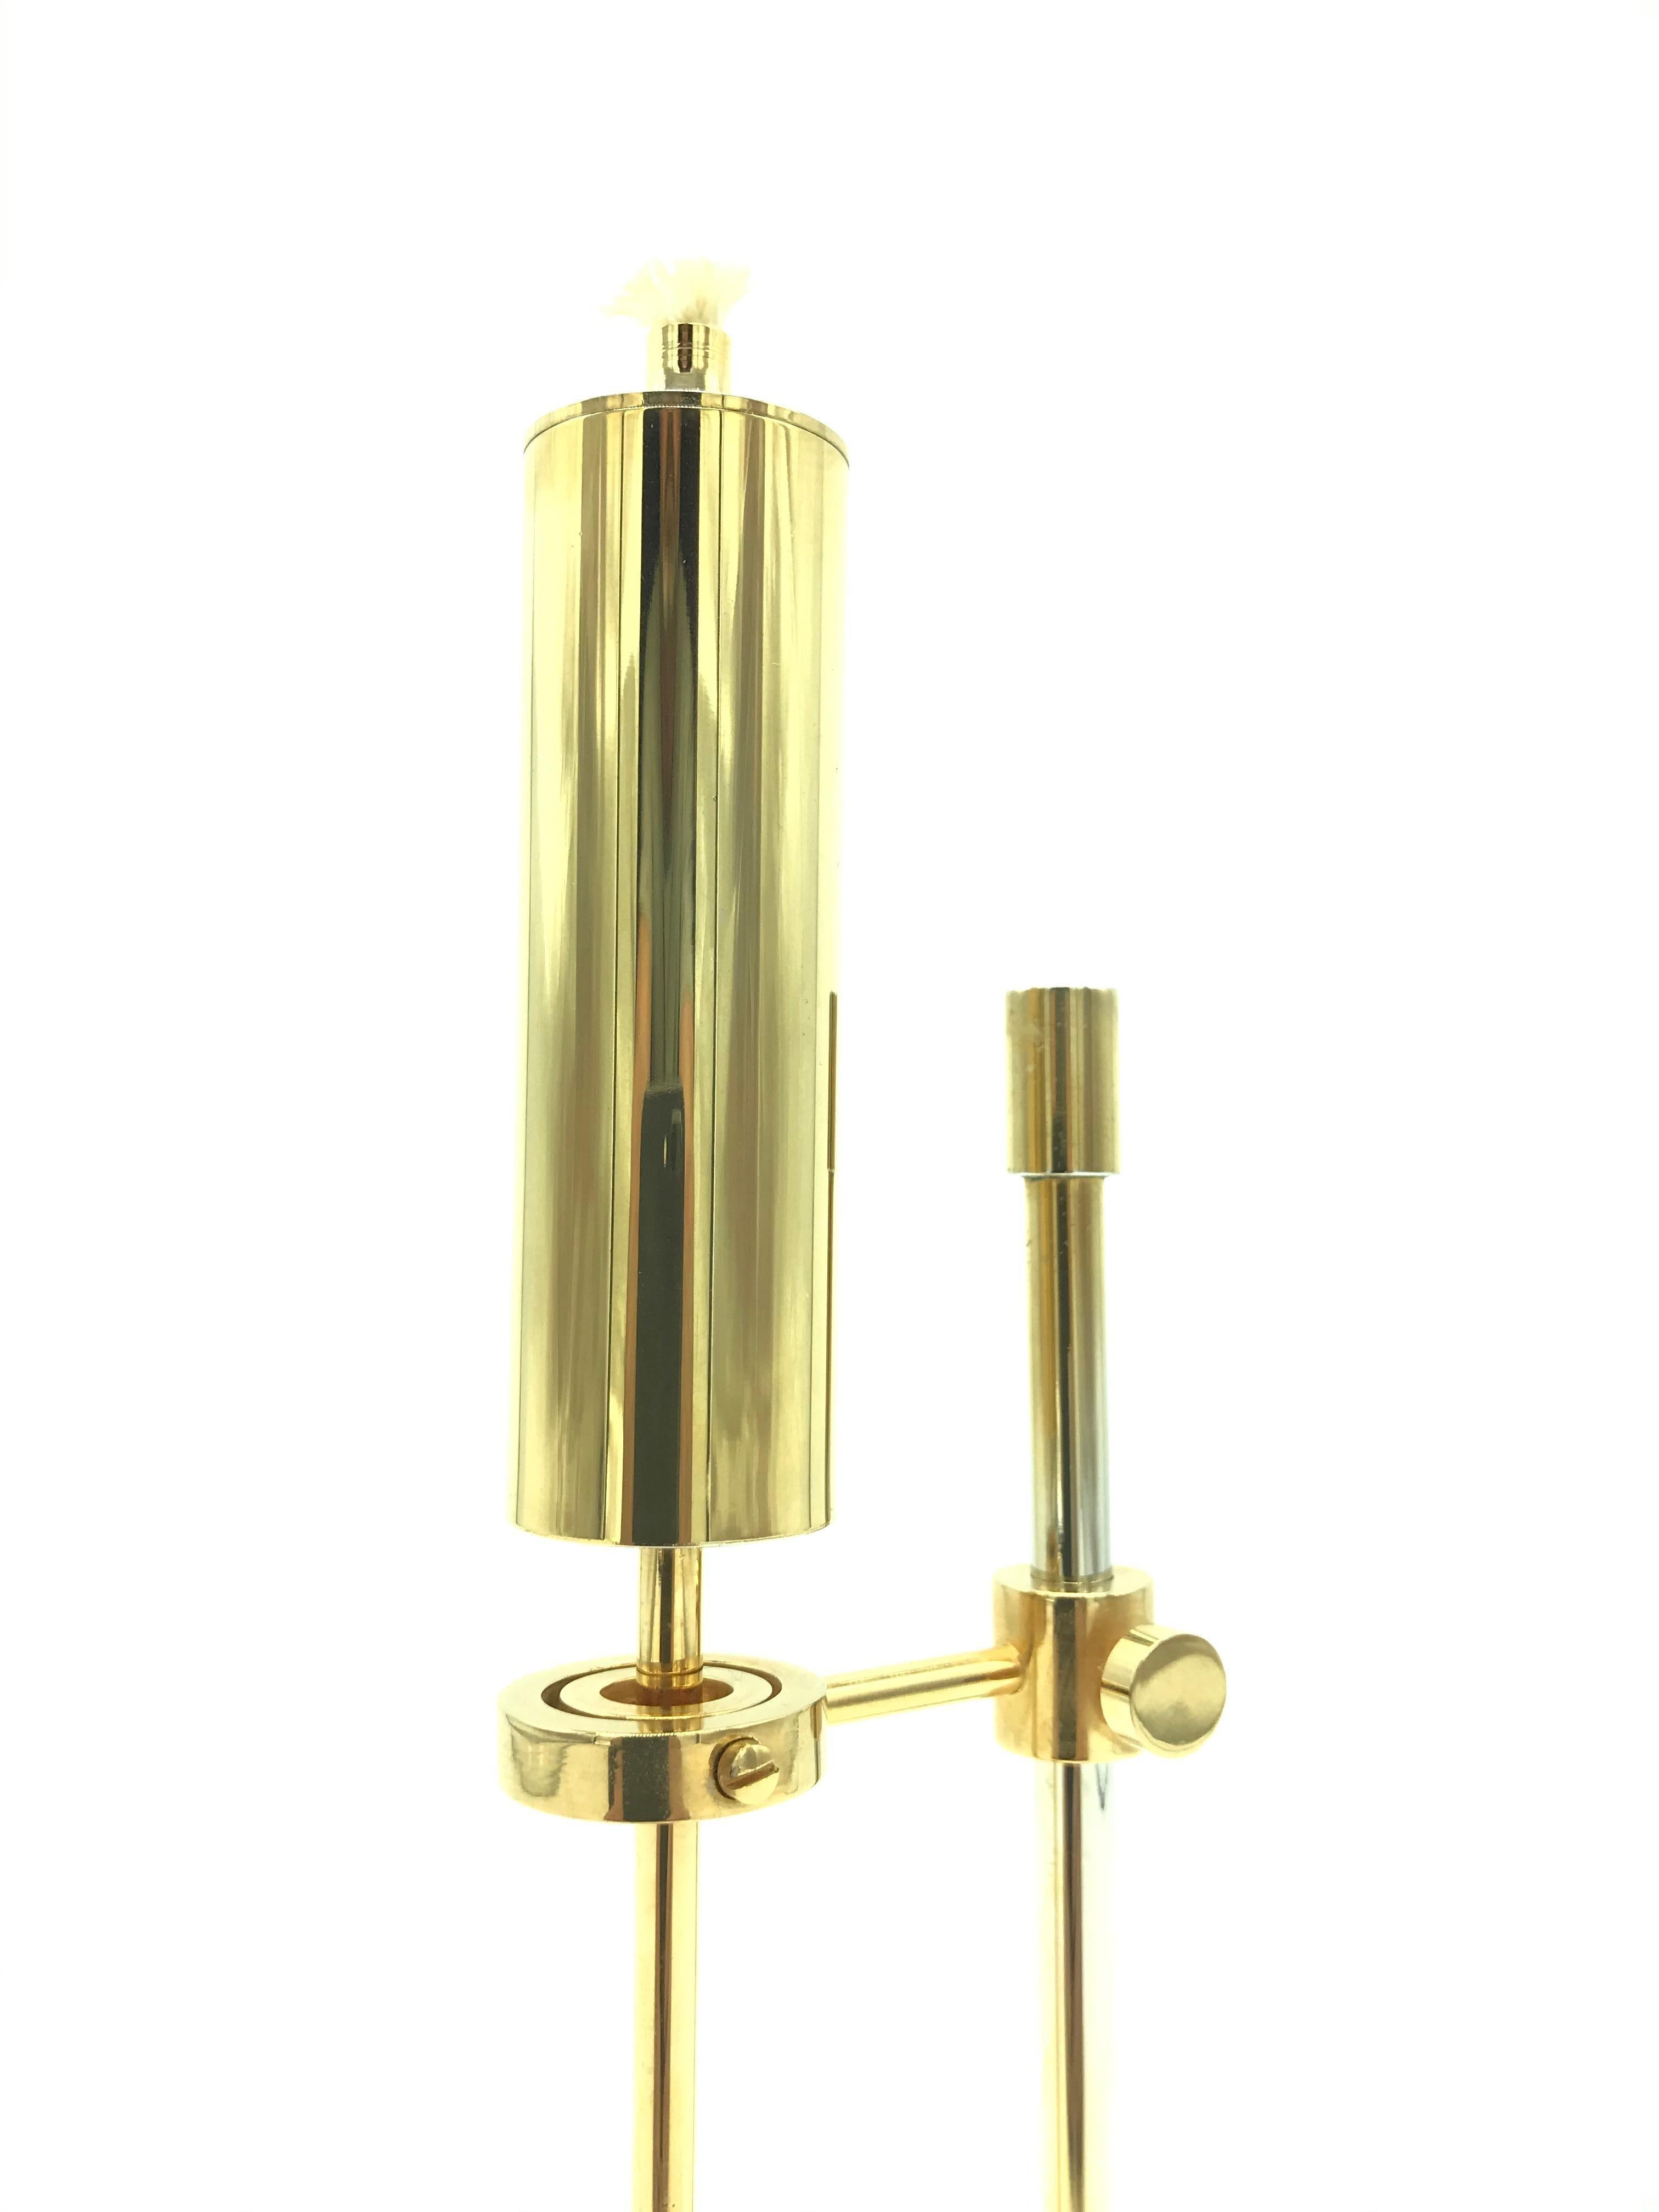 Mid-Century Modern Vintage Unused Oil Lamp by Ilse Ammonsen in 24-Carat Gold Plate